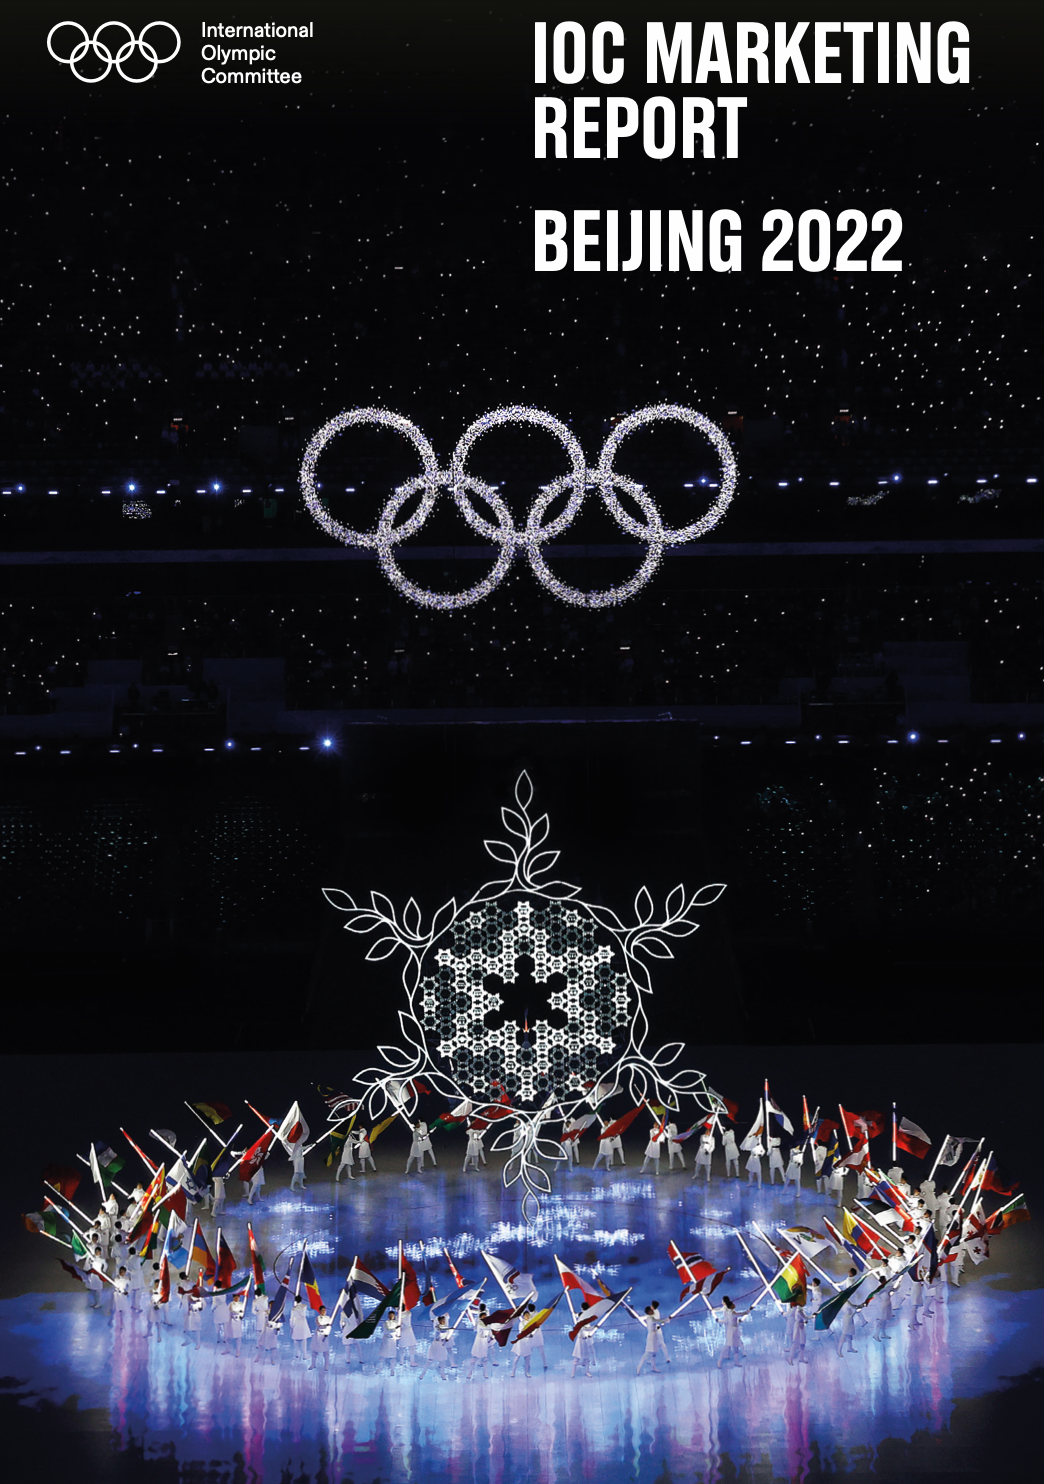 全球觀眾超20億！《北京冬奧會市場營銷報告》解讀這6大亮點